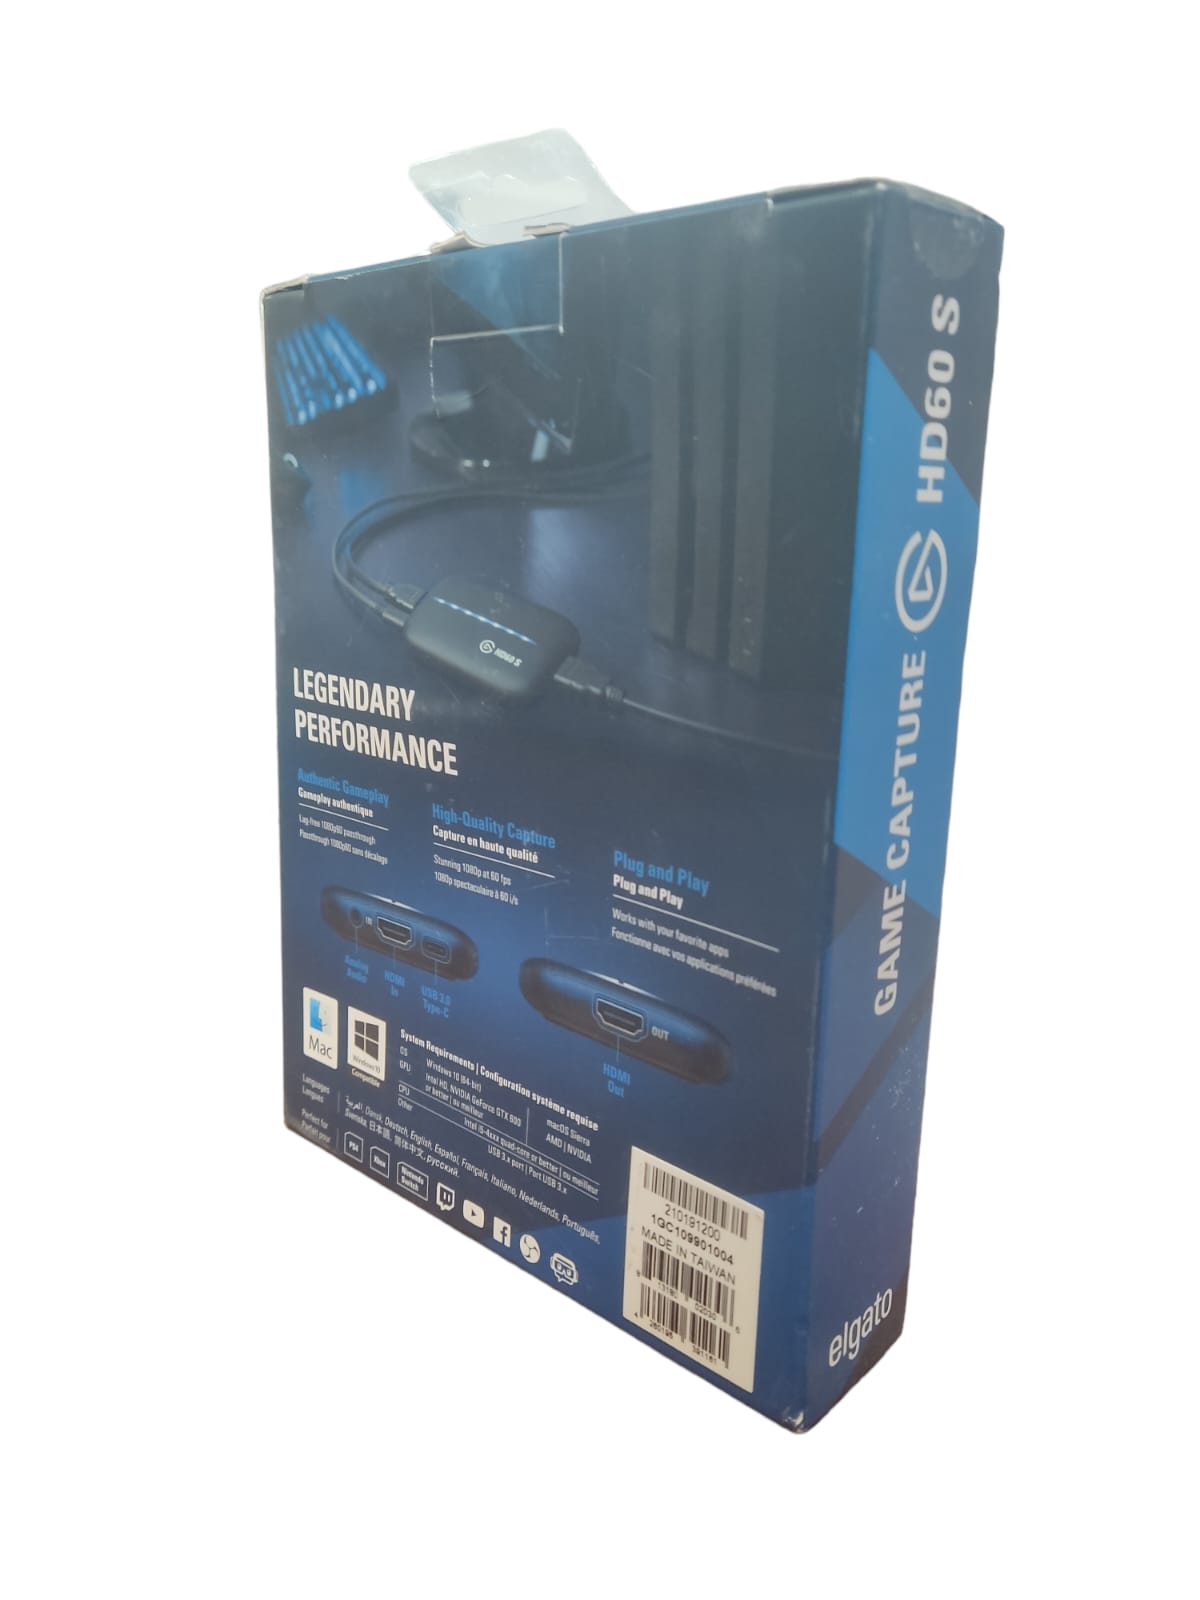 Elgato HD60 S – Video Capturadora Externa para Transmisión y Grabación  1080p60 / USB 3.0 / PC Stream – PCMIG